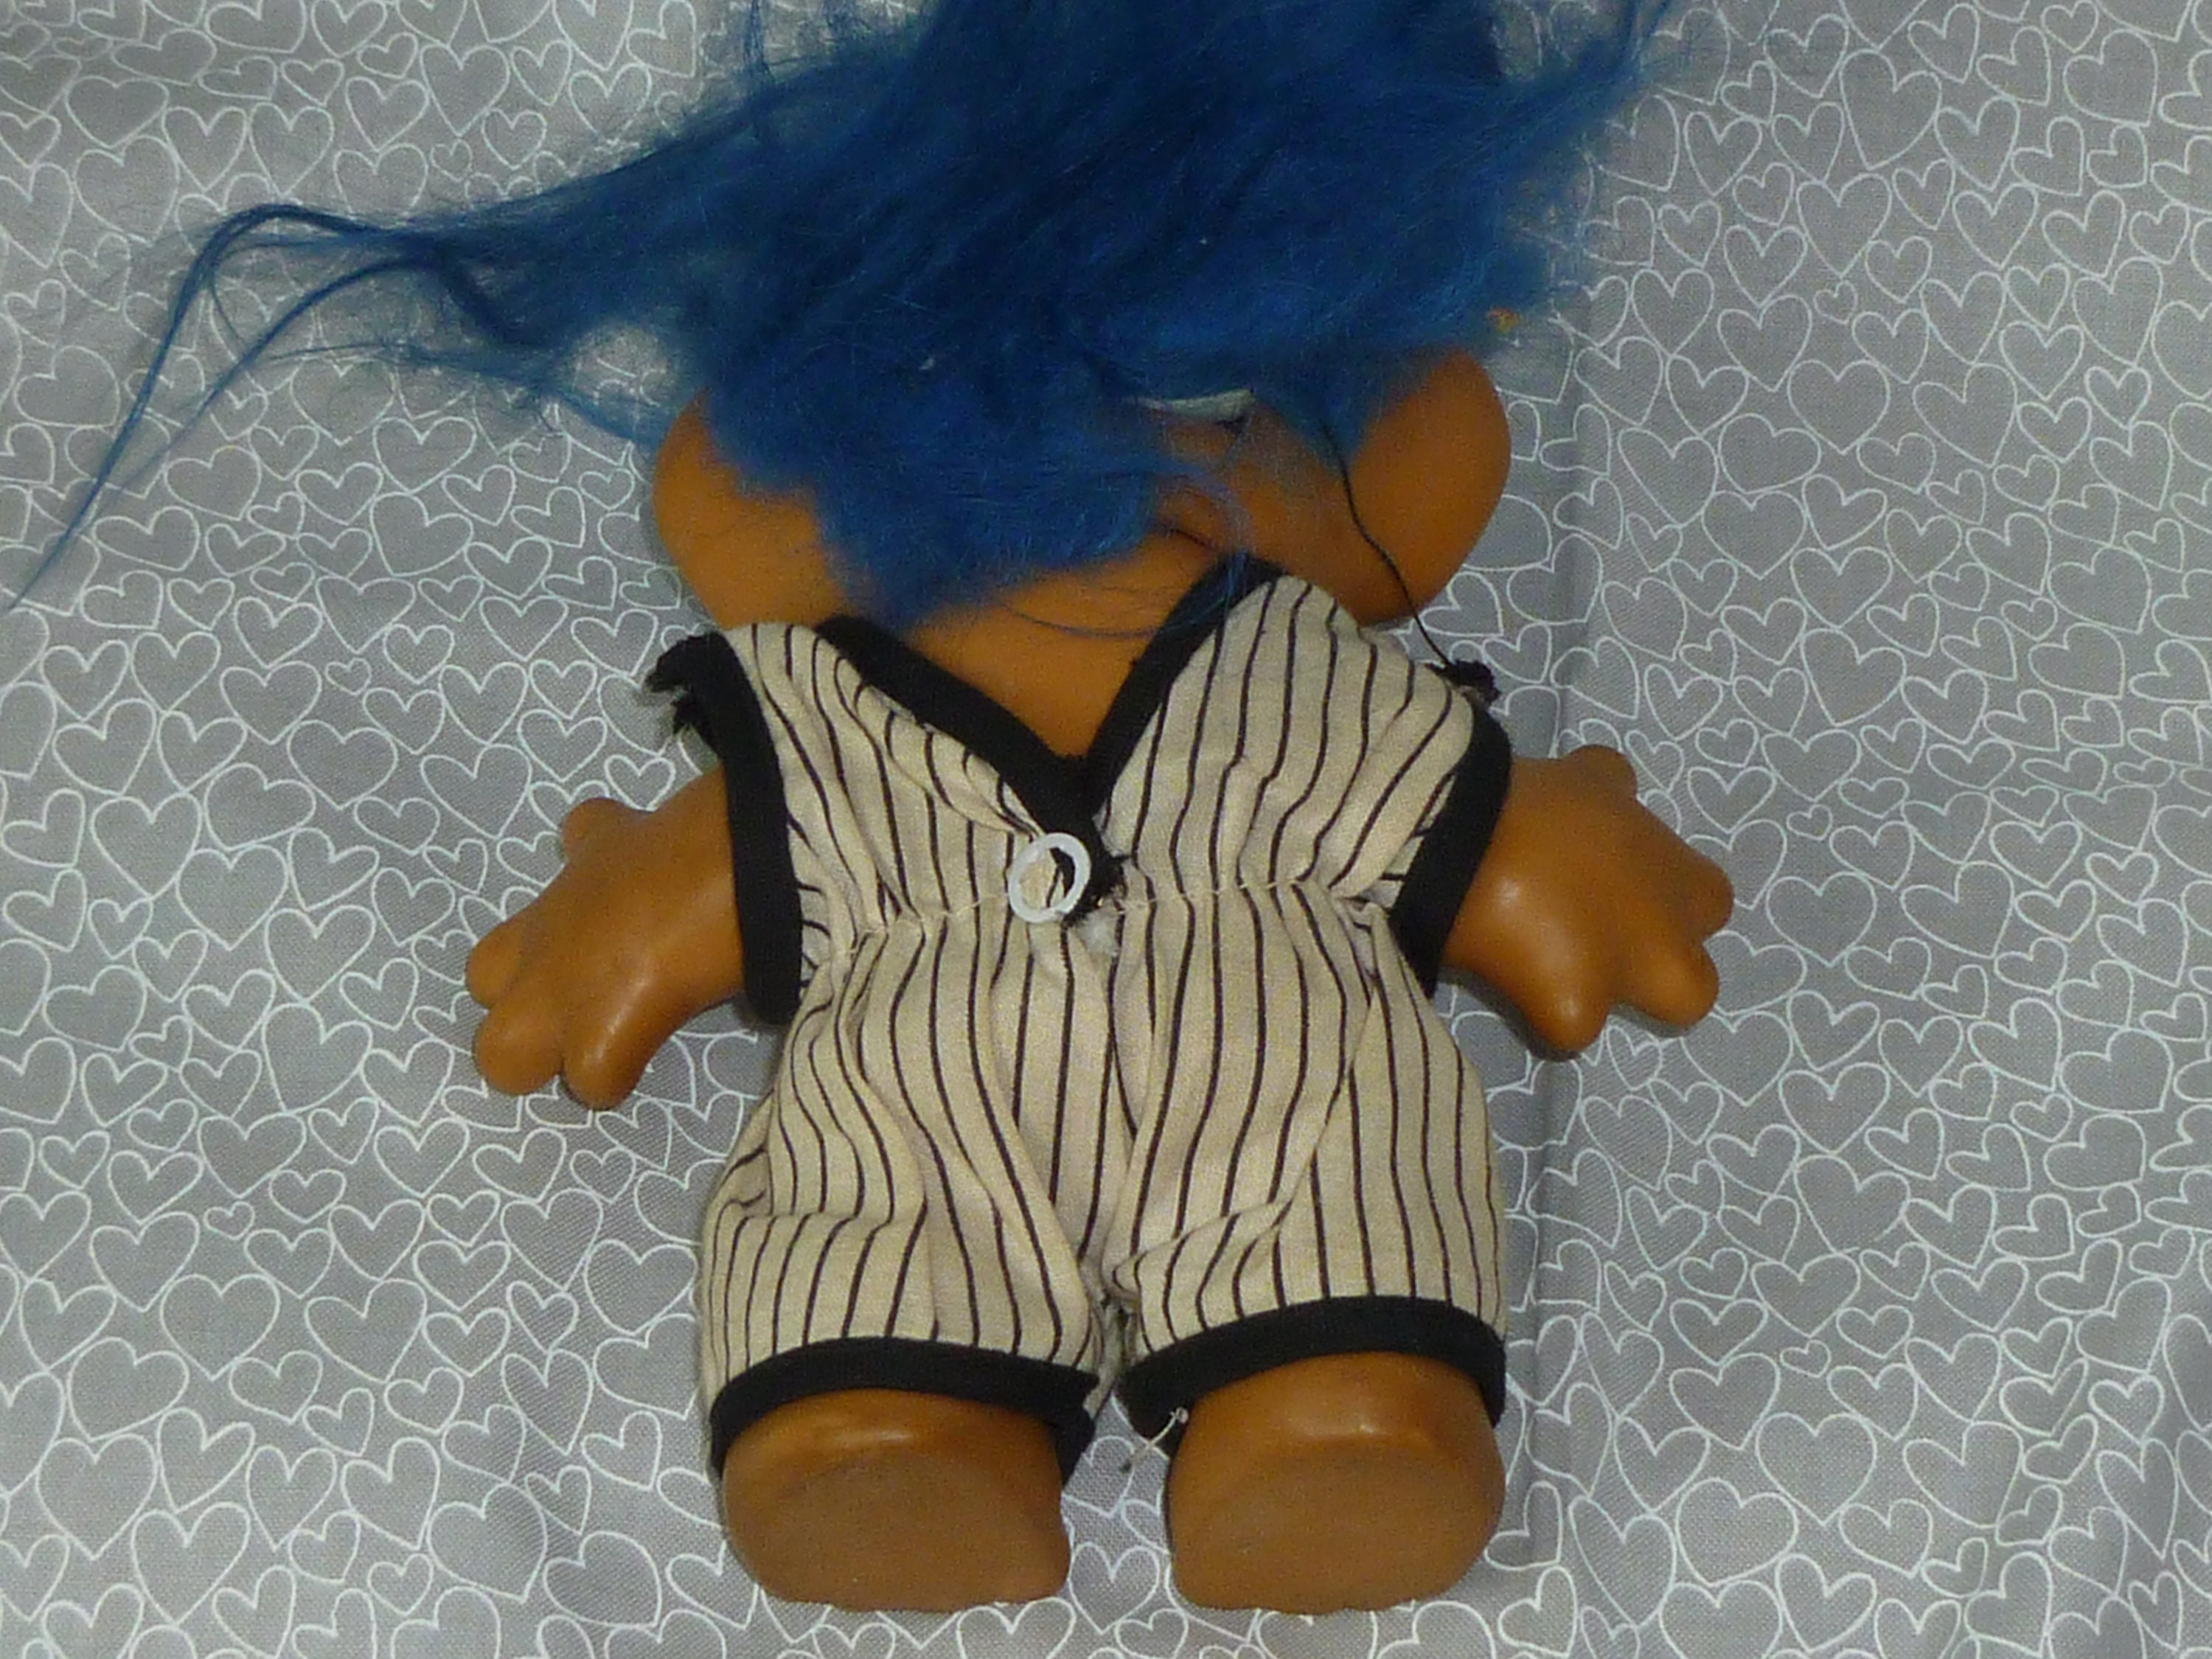 Vintage UNEEDA Wishnik Troll Doll Baseball Uniform Blue Eyes Blue Hair 1960s